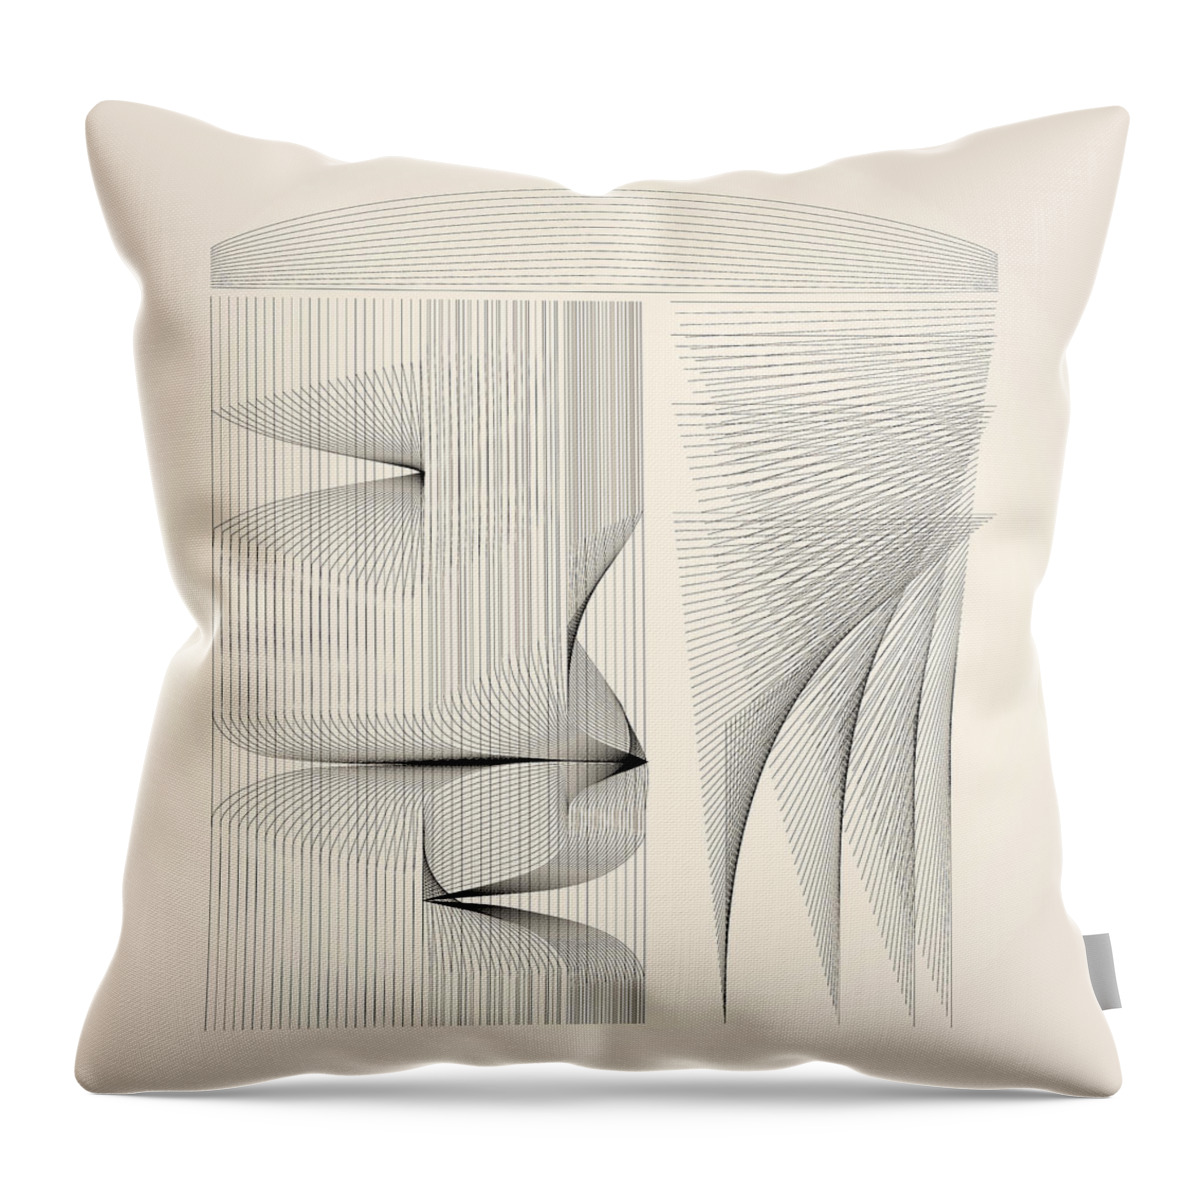 Digital Throw Pillow featuring the digital art House by Kevin McLaughlin